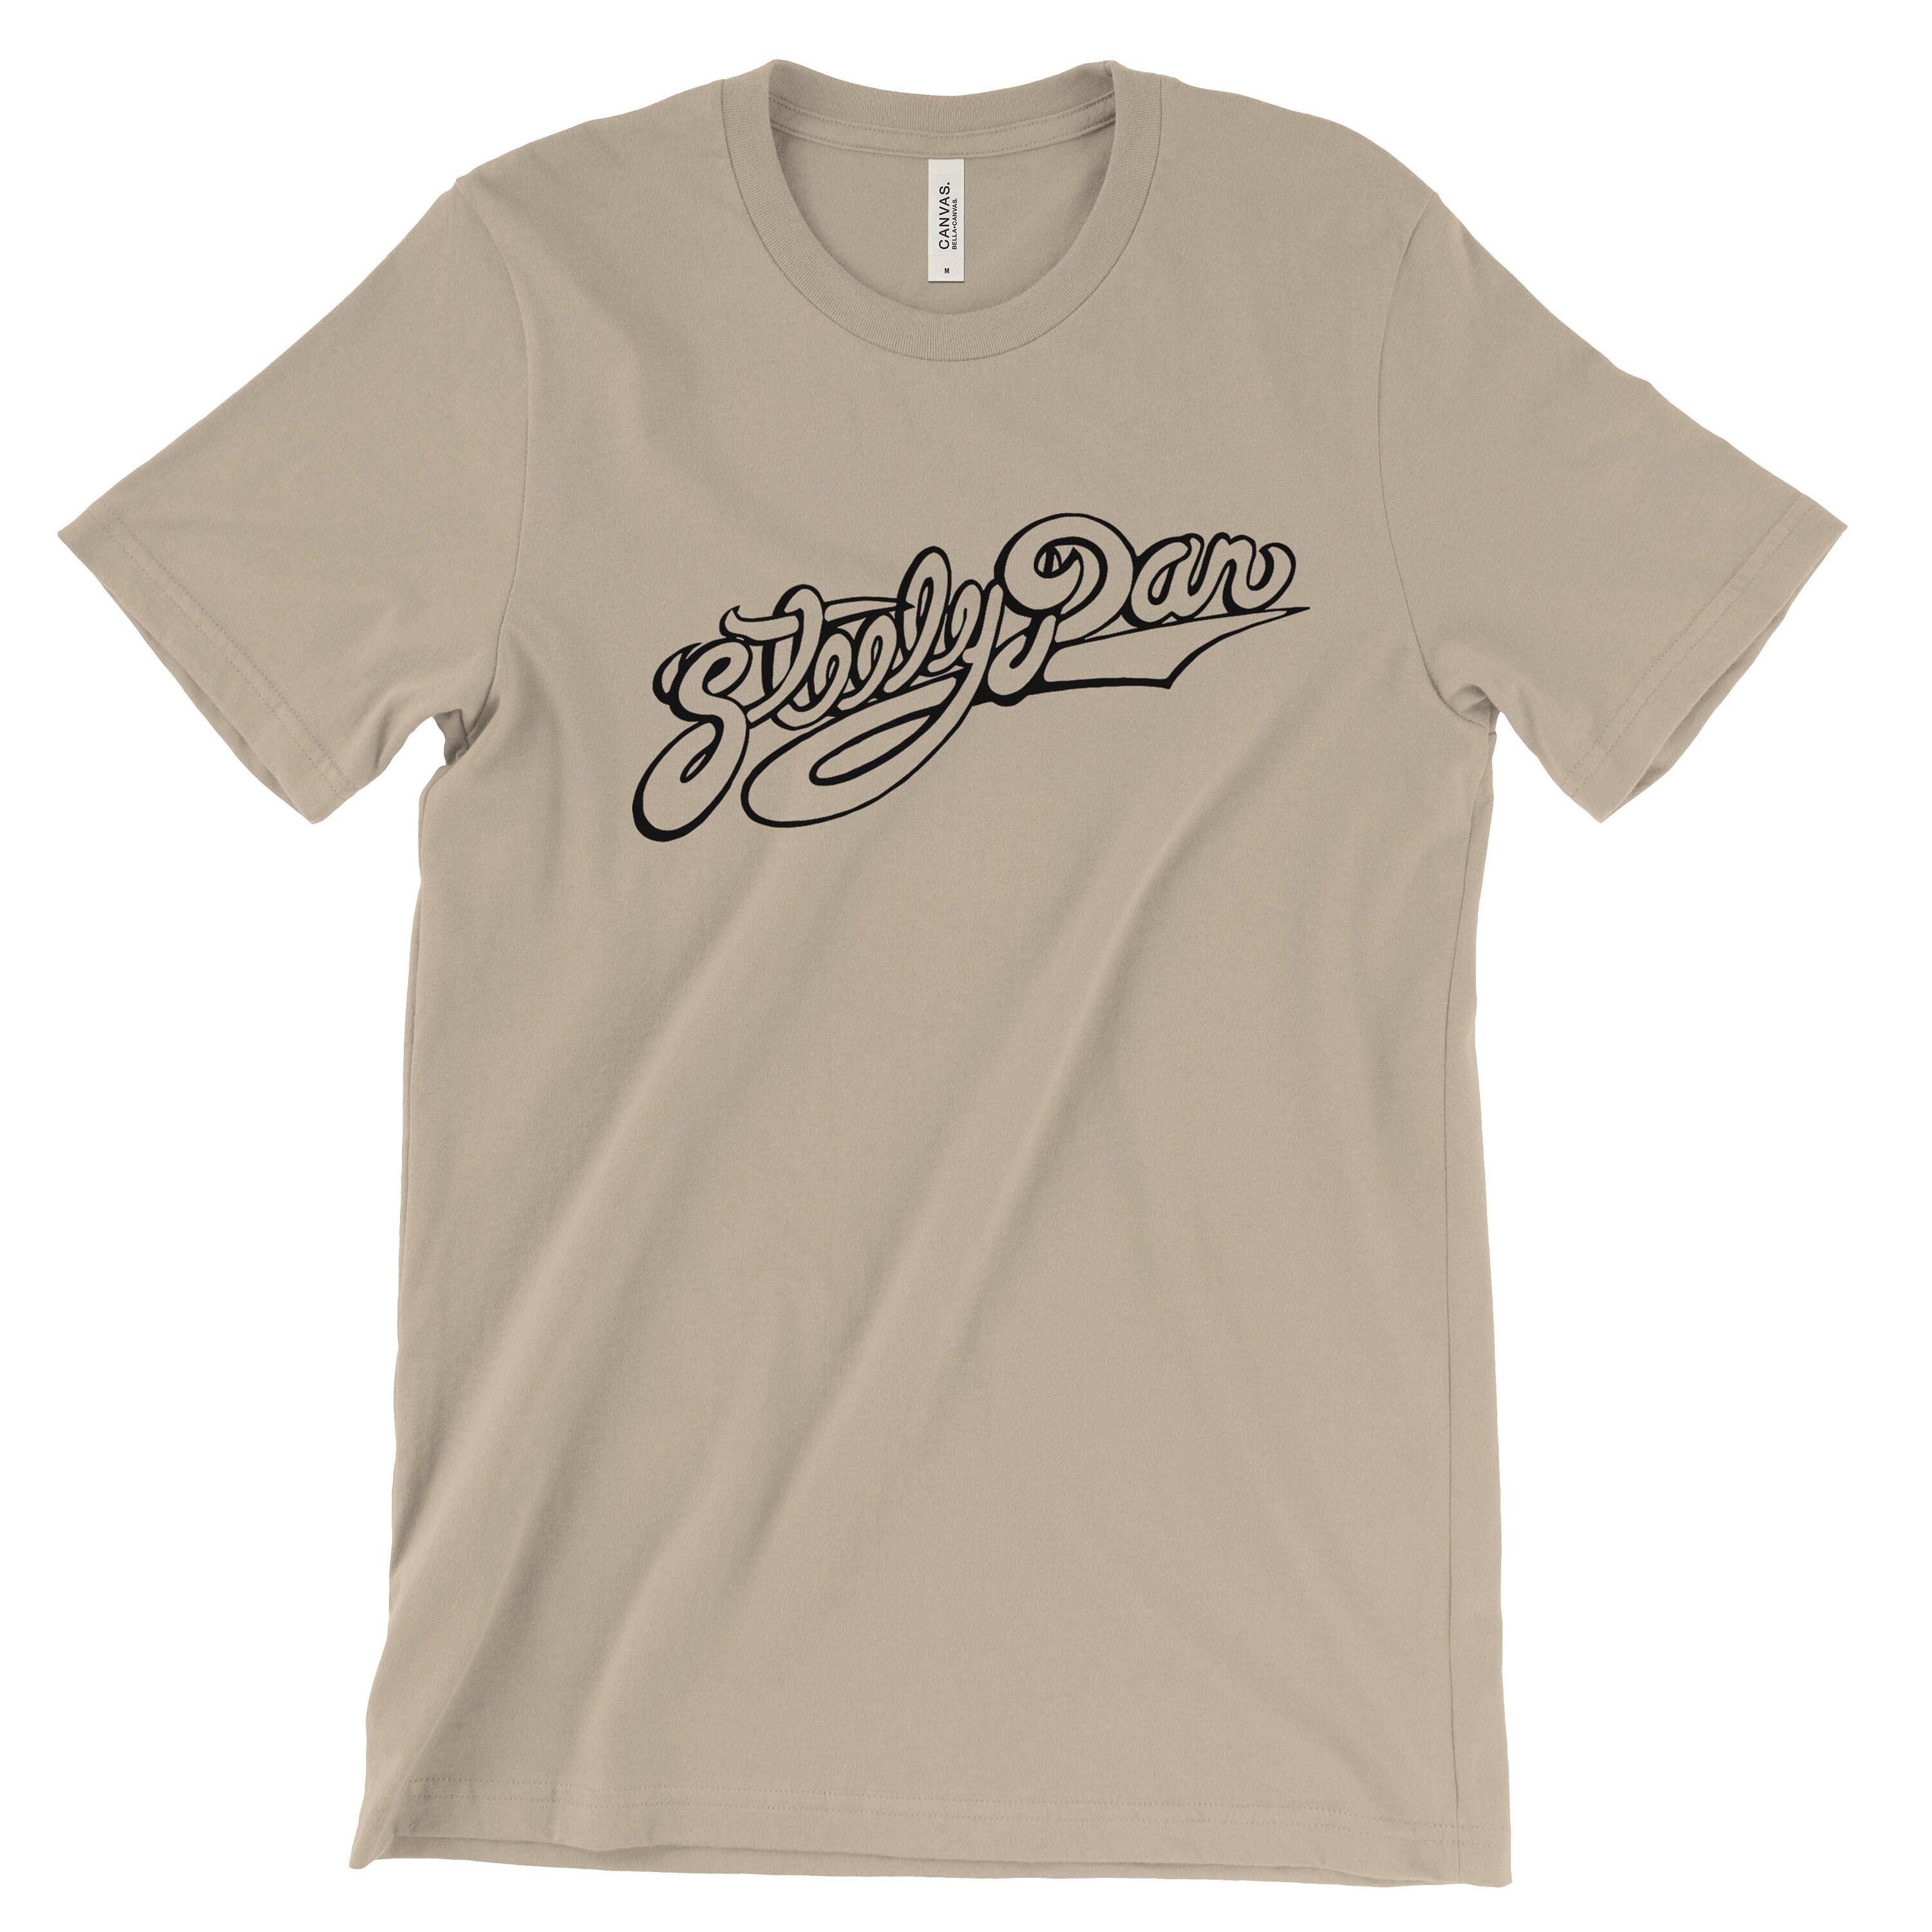 Steely Dan T-Shirt AJA Royal Scam Funk Soul 1970s culture | Etsy